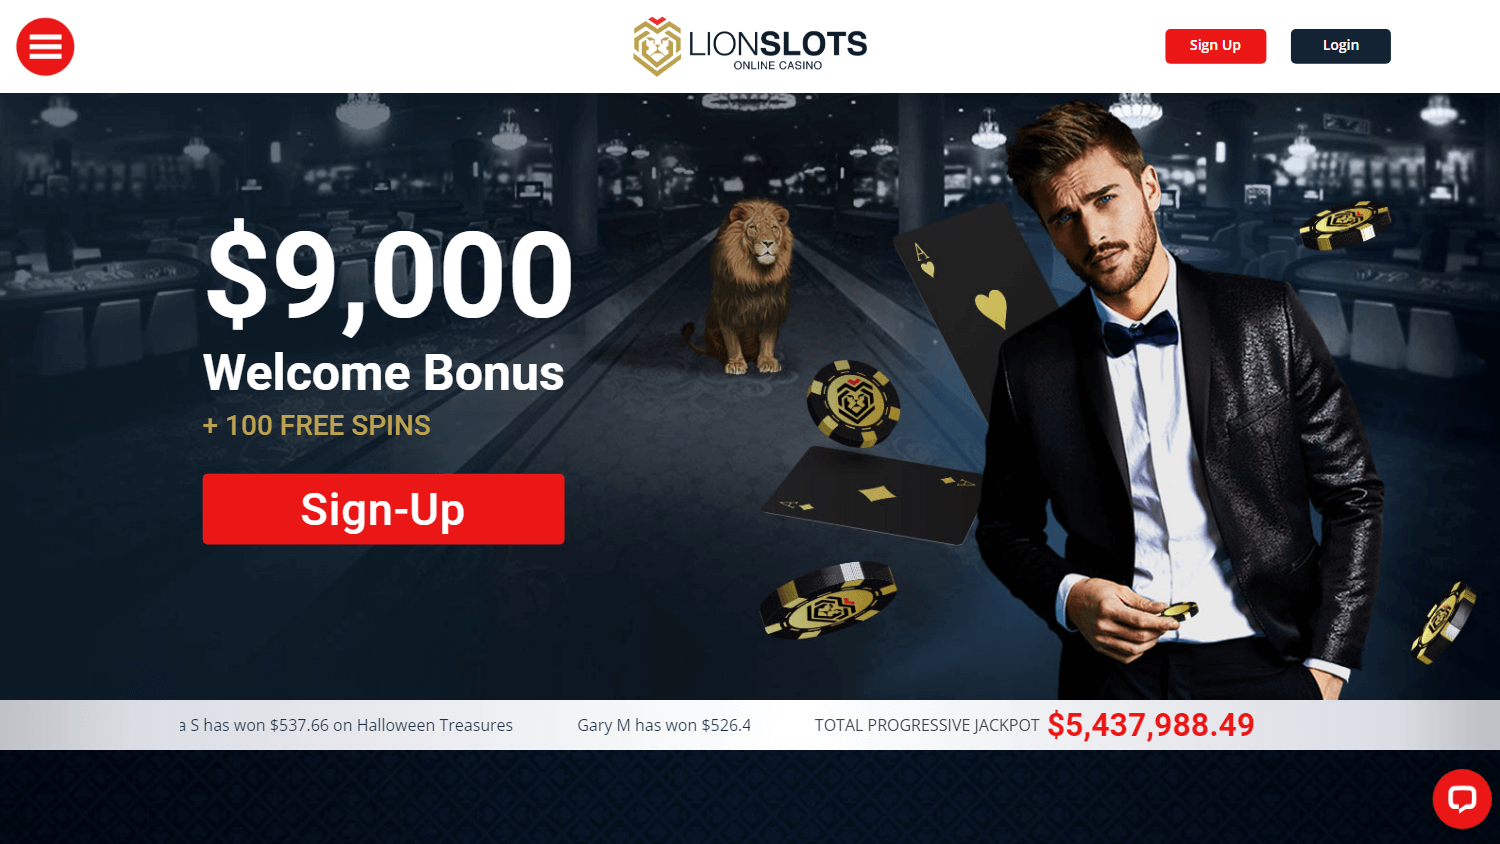 lion_slots_online_casino_homepage_desktop